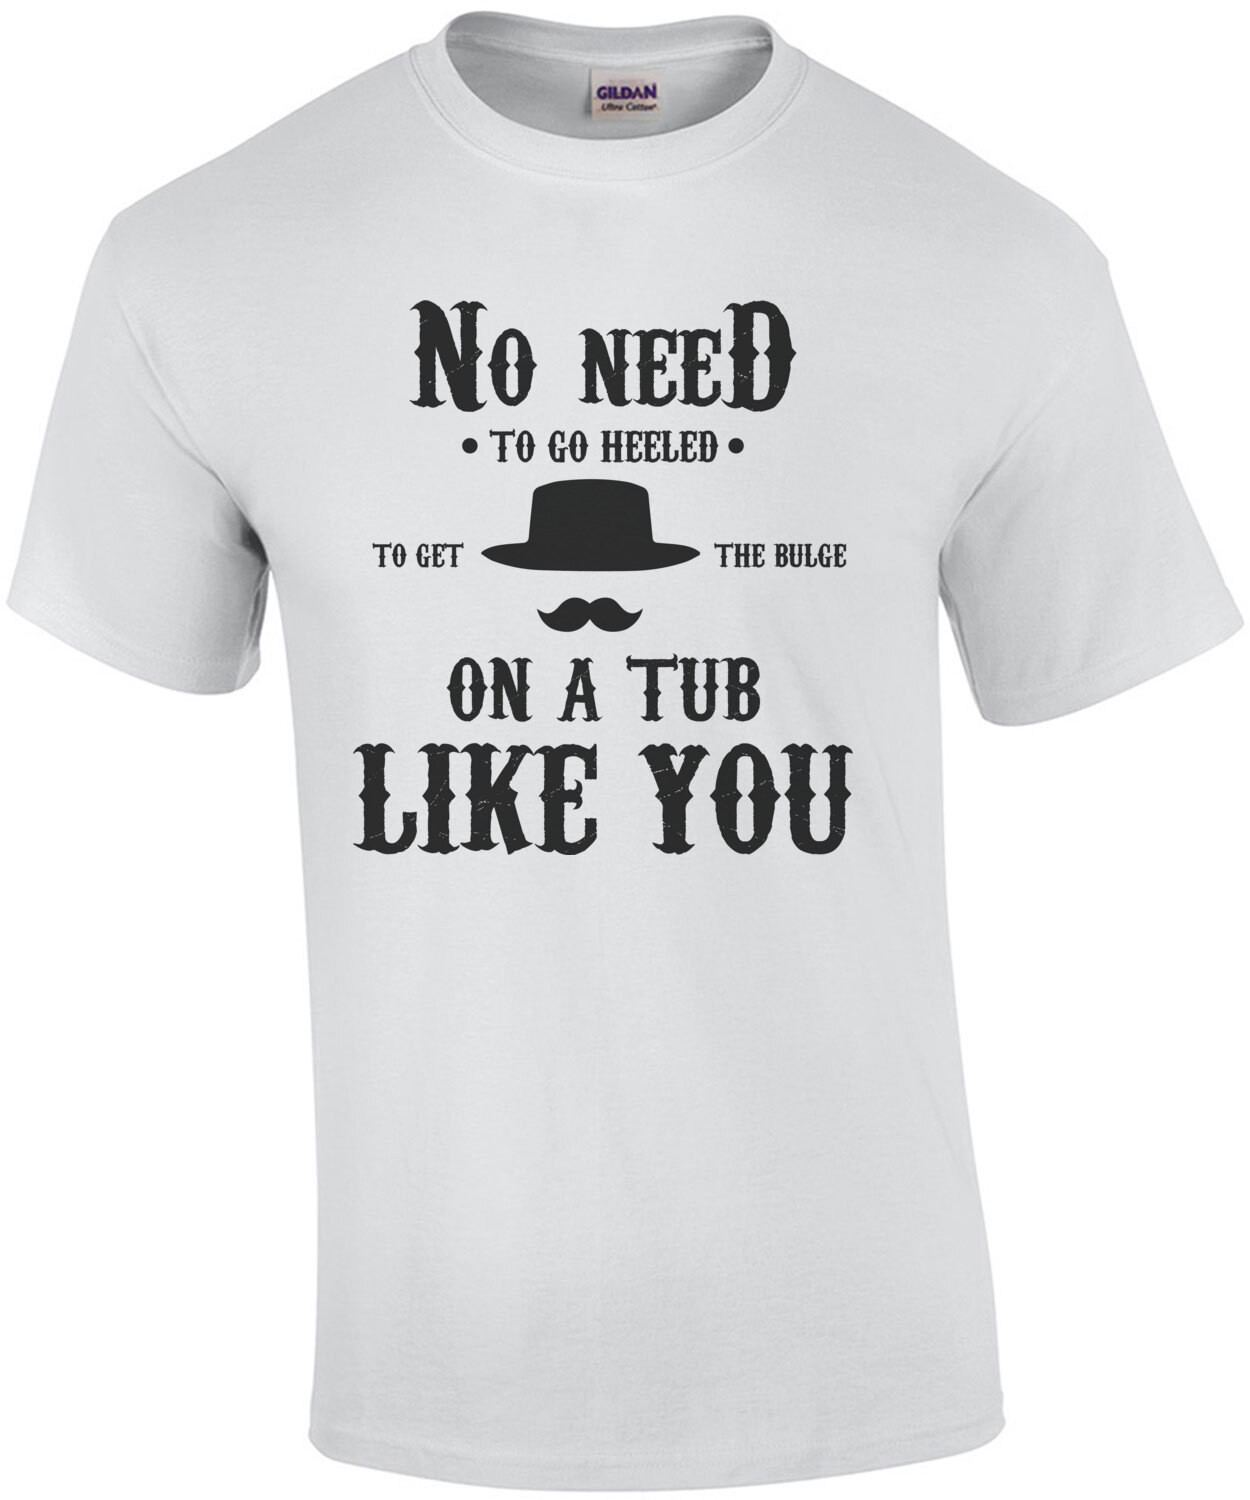 No Need to go heeled to get the bulge on a tub like you - Wyatt Earp - Tombstone - 90's T-Shirt